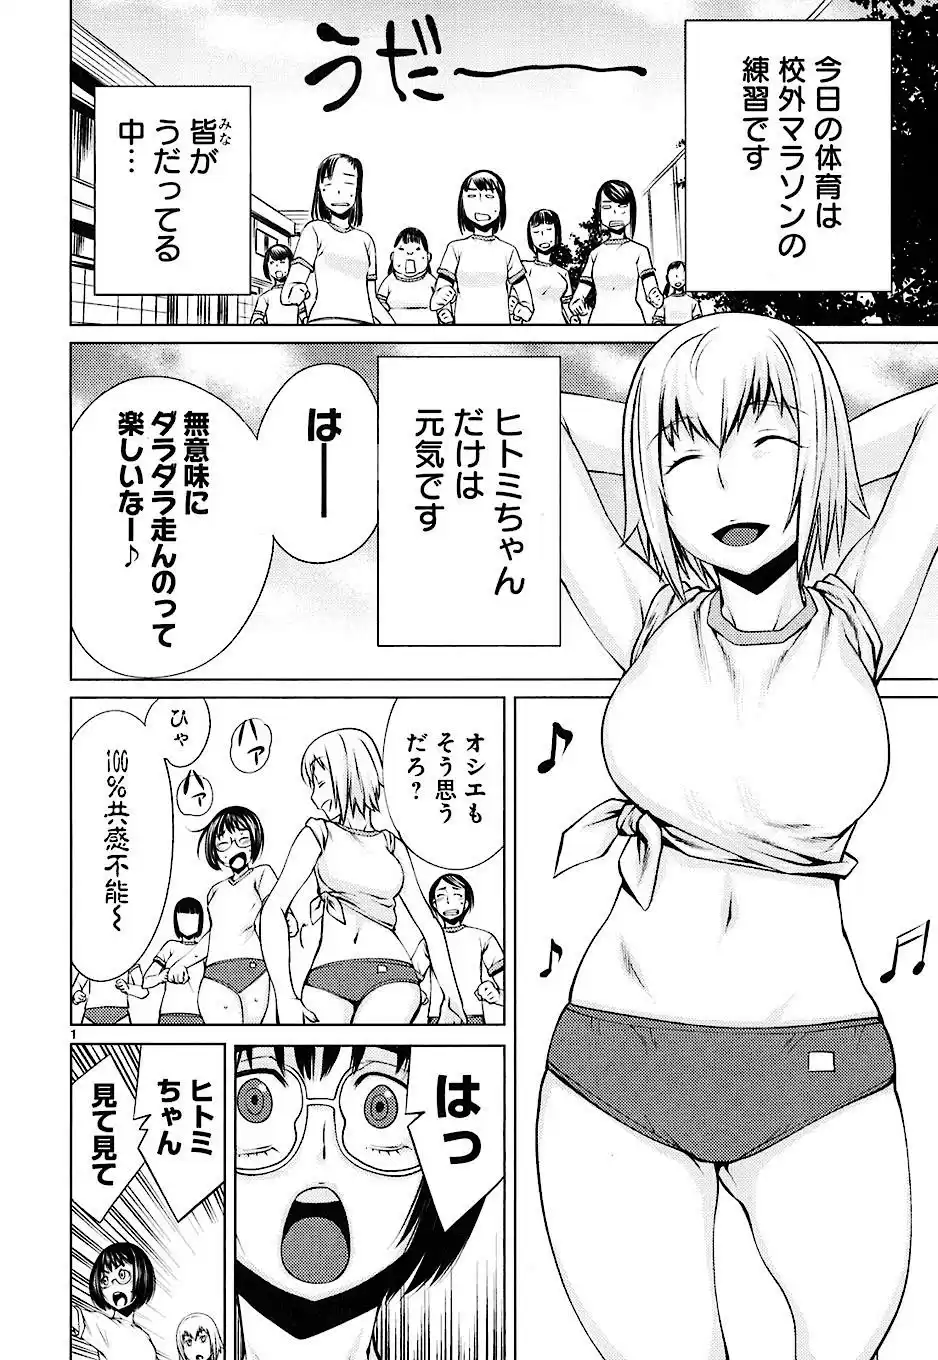 33 Manga J0110eh